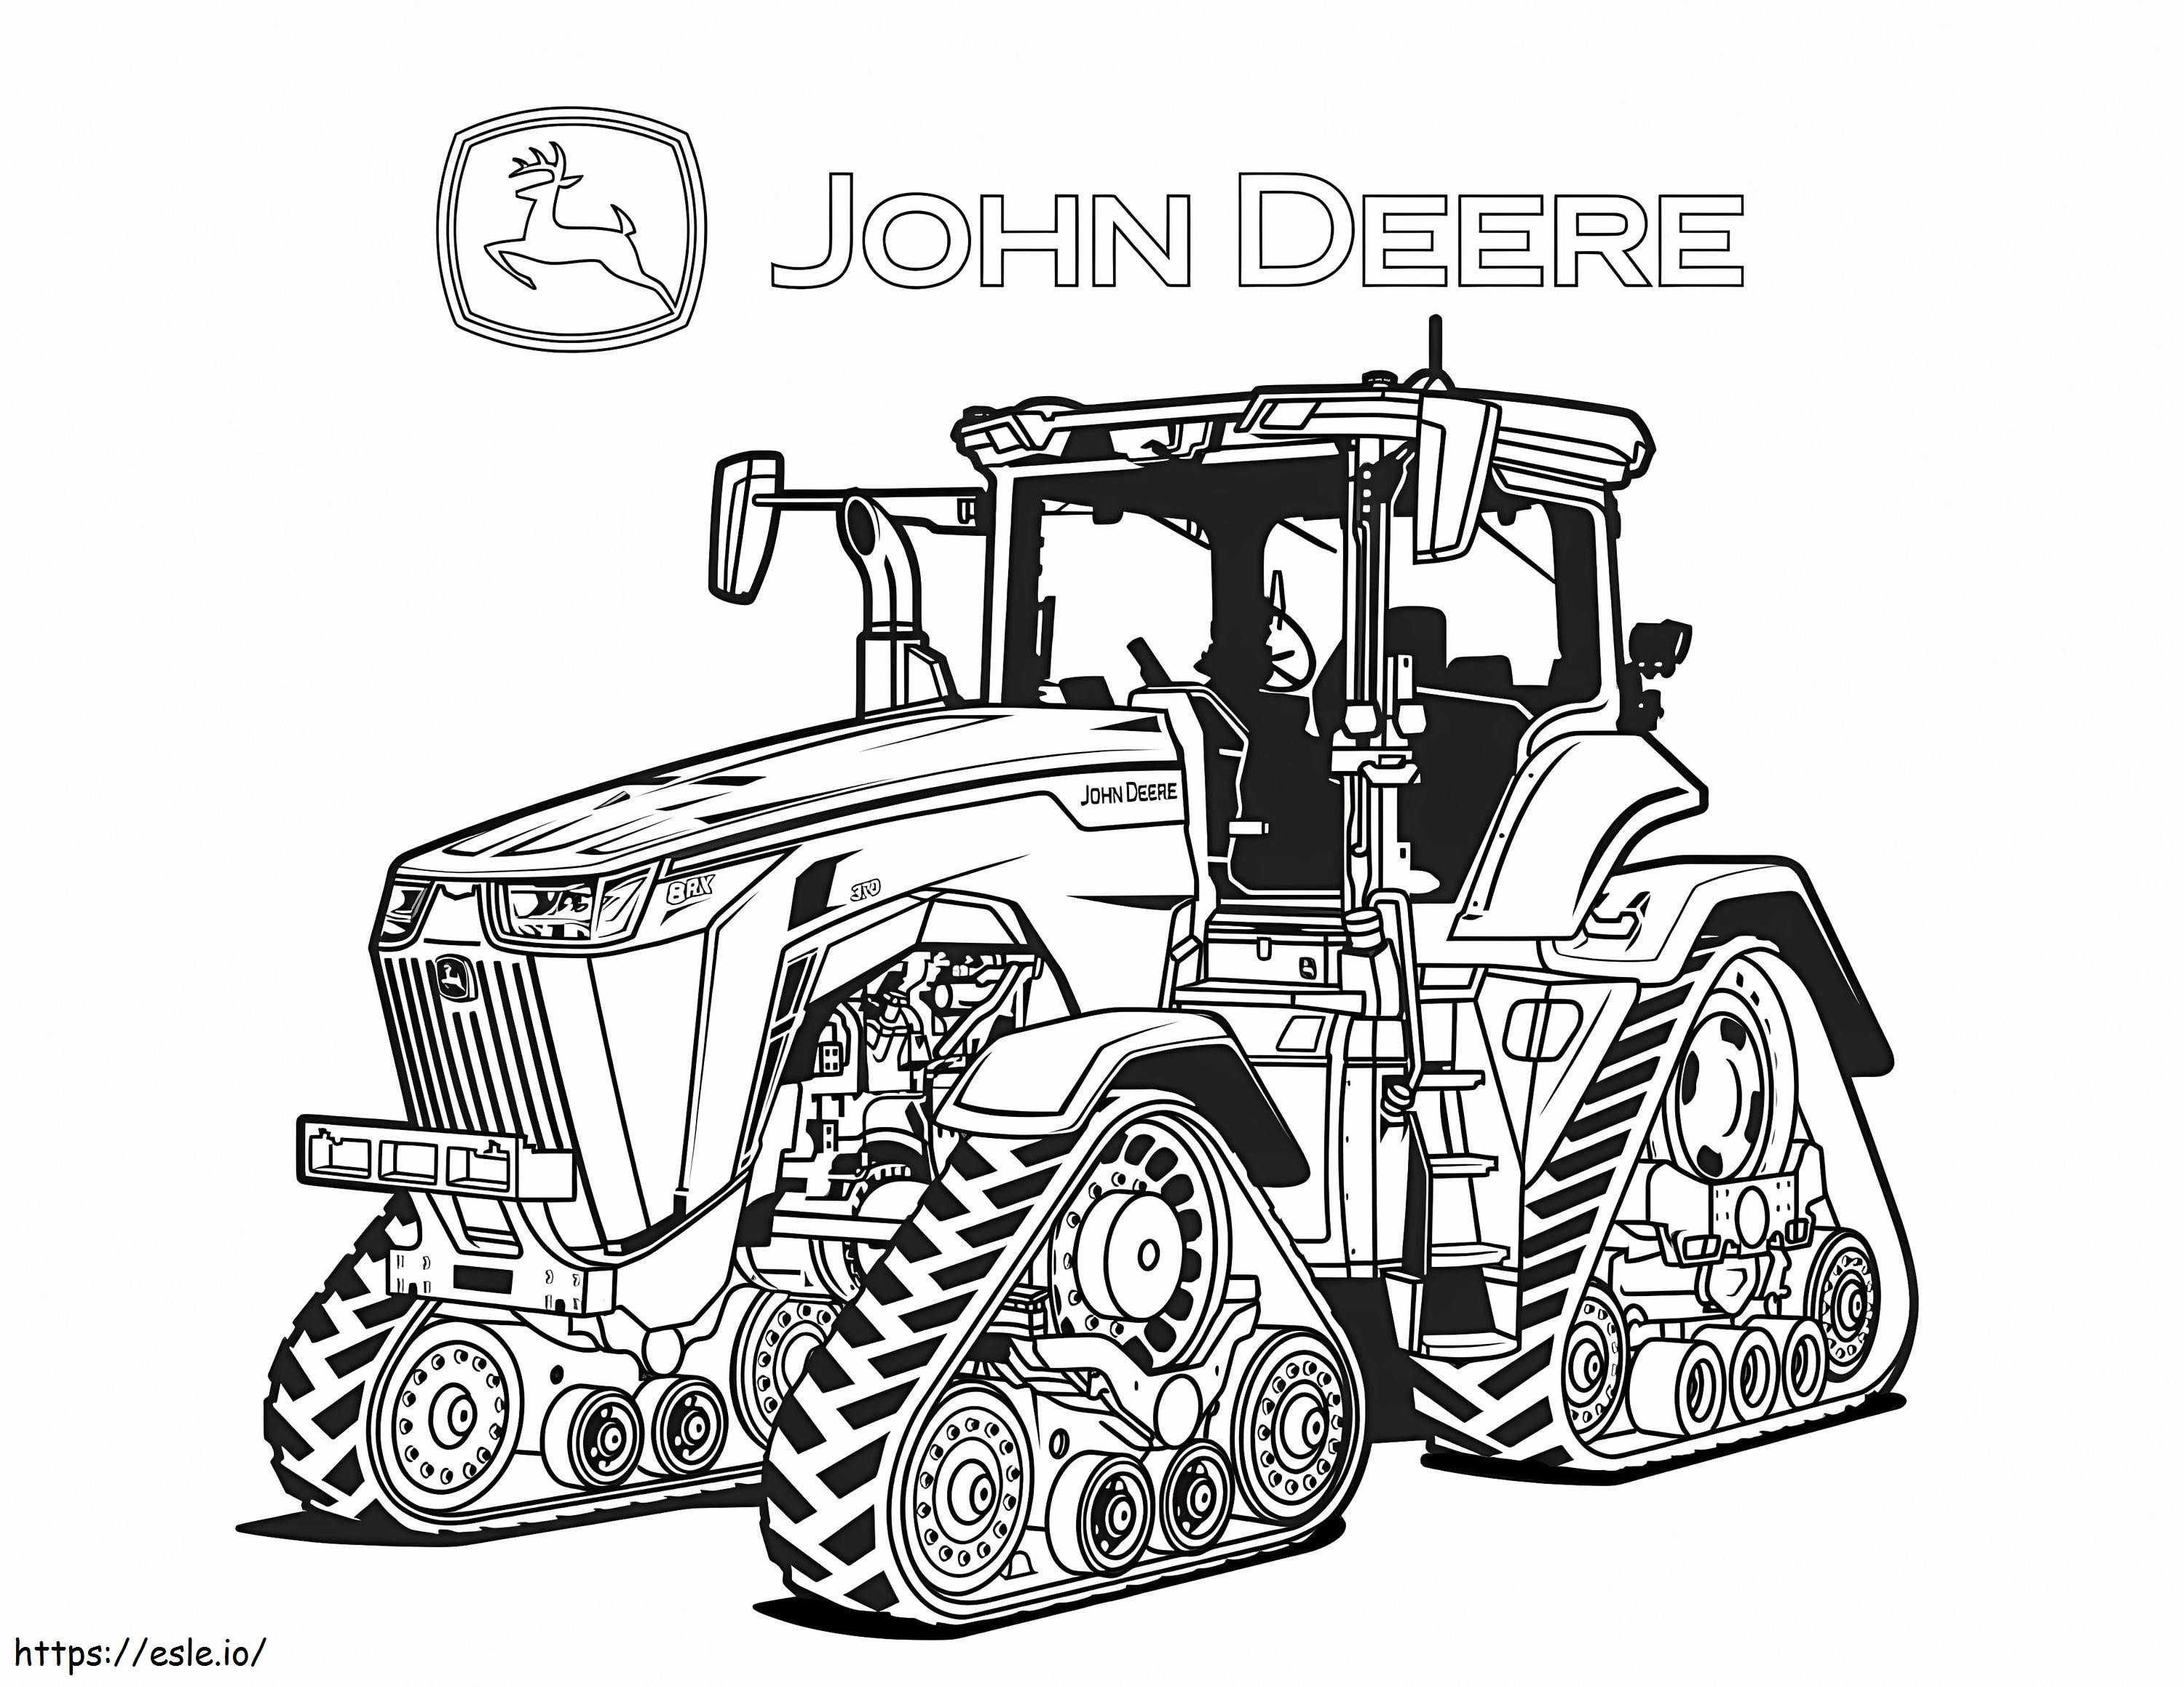 John Deere 2 coloring page